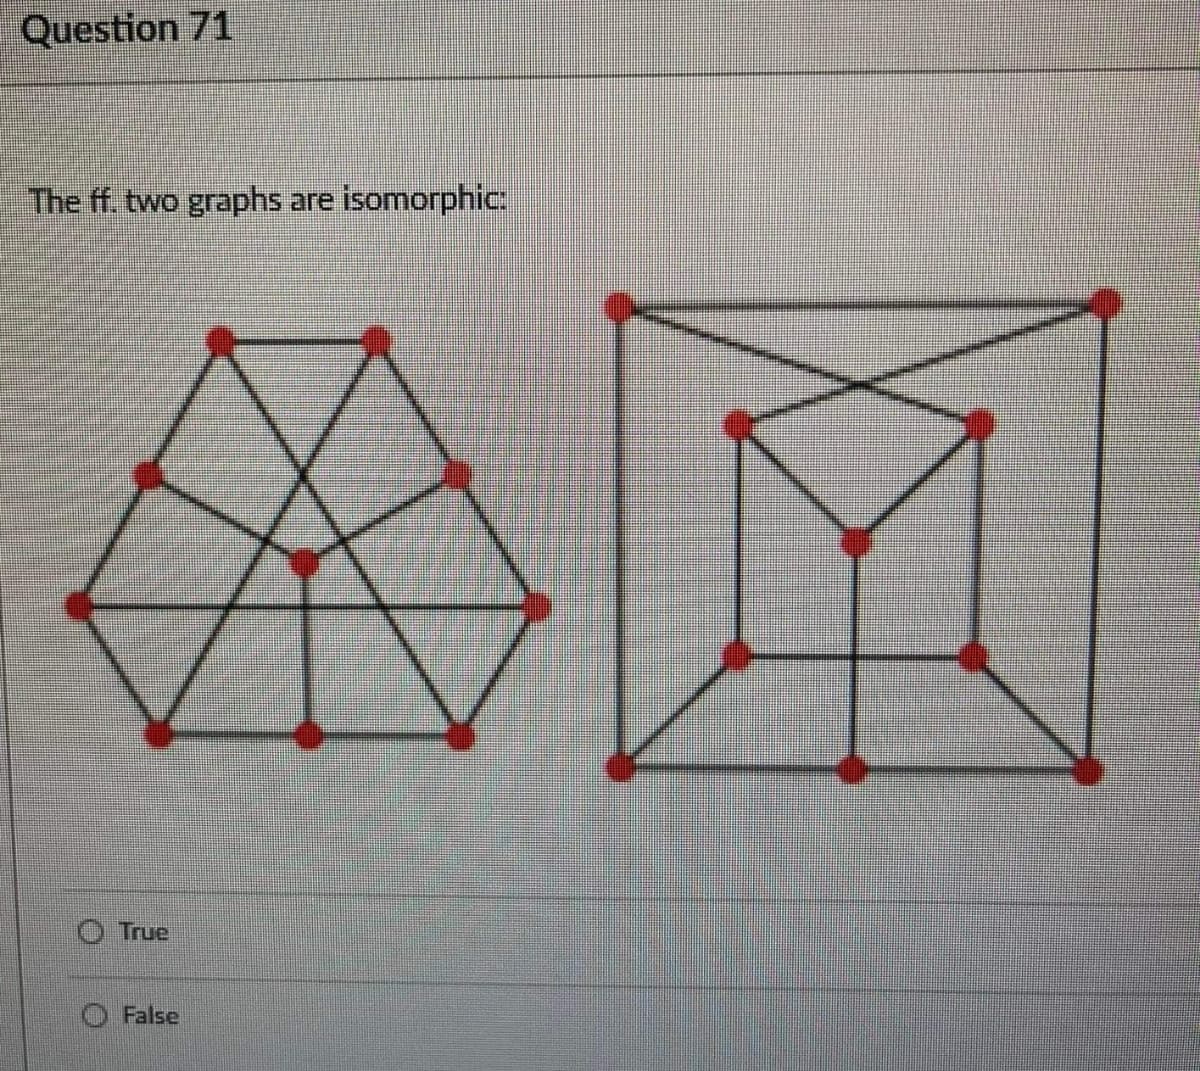 Question 71
The ff. two graphs are isomorphic
全國
O True
O False
